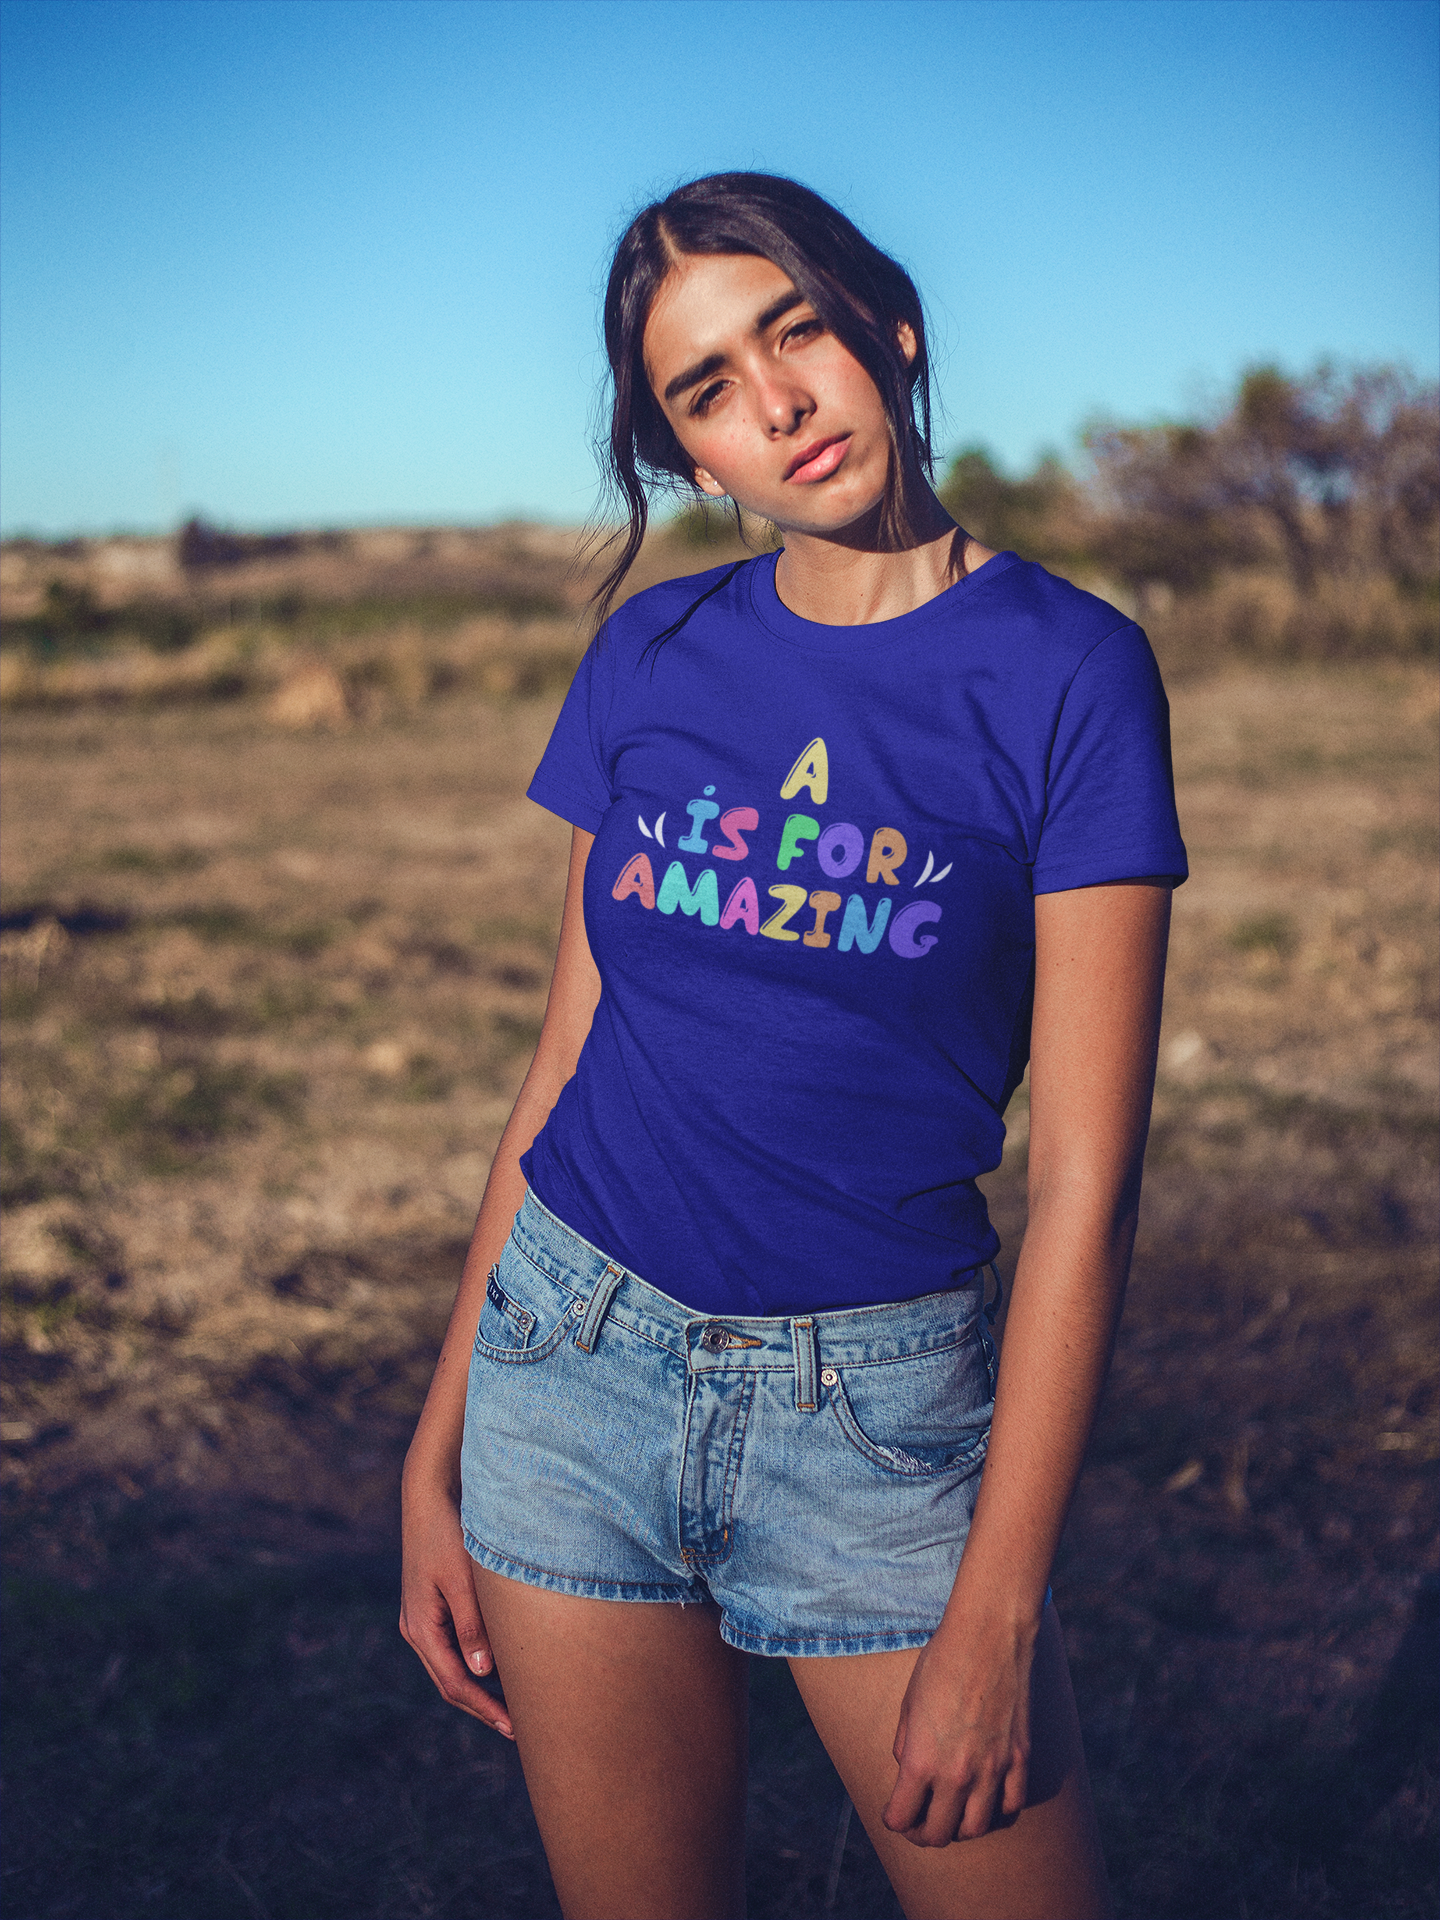 A is For Amazing Women's Premium Tee, Amazing shirts, Inspirational shirts, Motivational Shirts, Positive shirts, Trendy tees